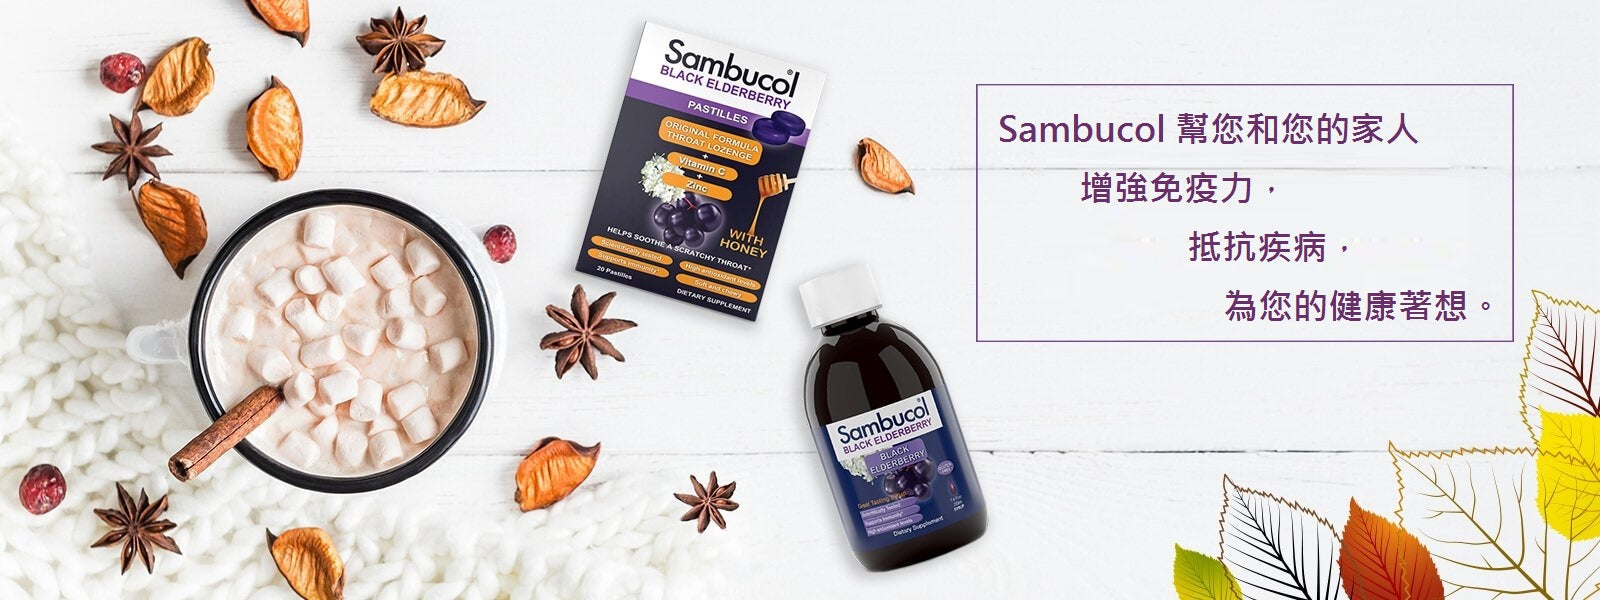 Sambucol healthy marketing slide hk